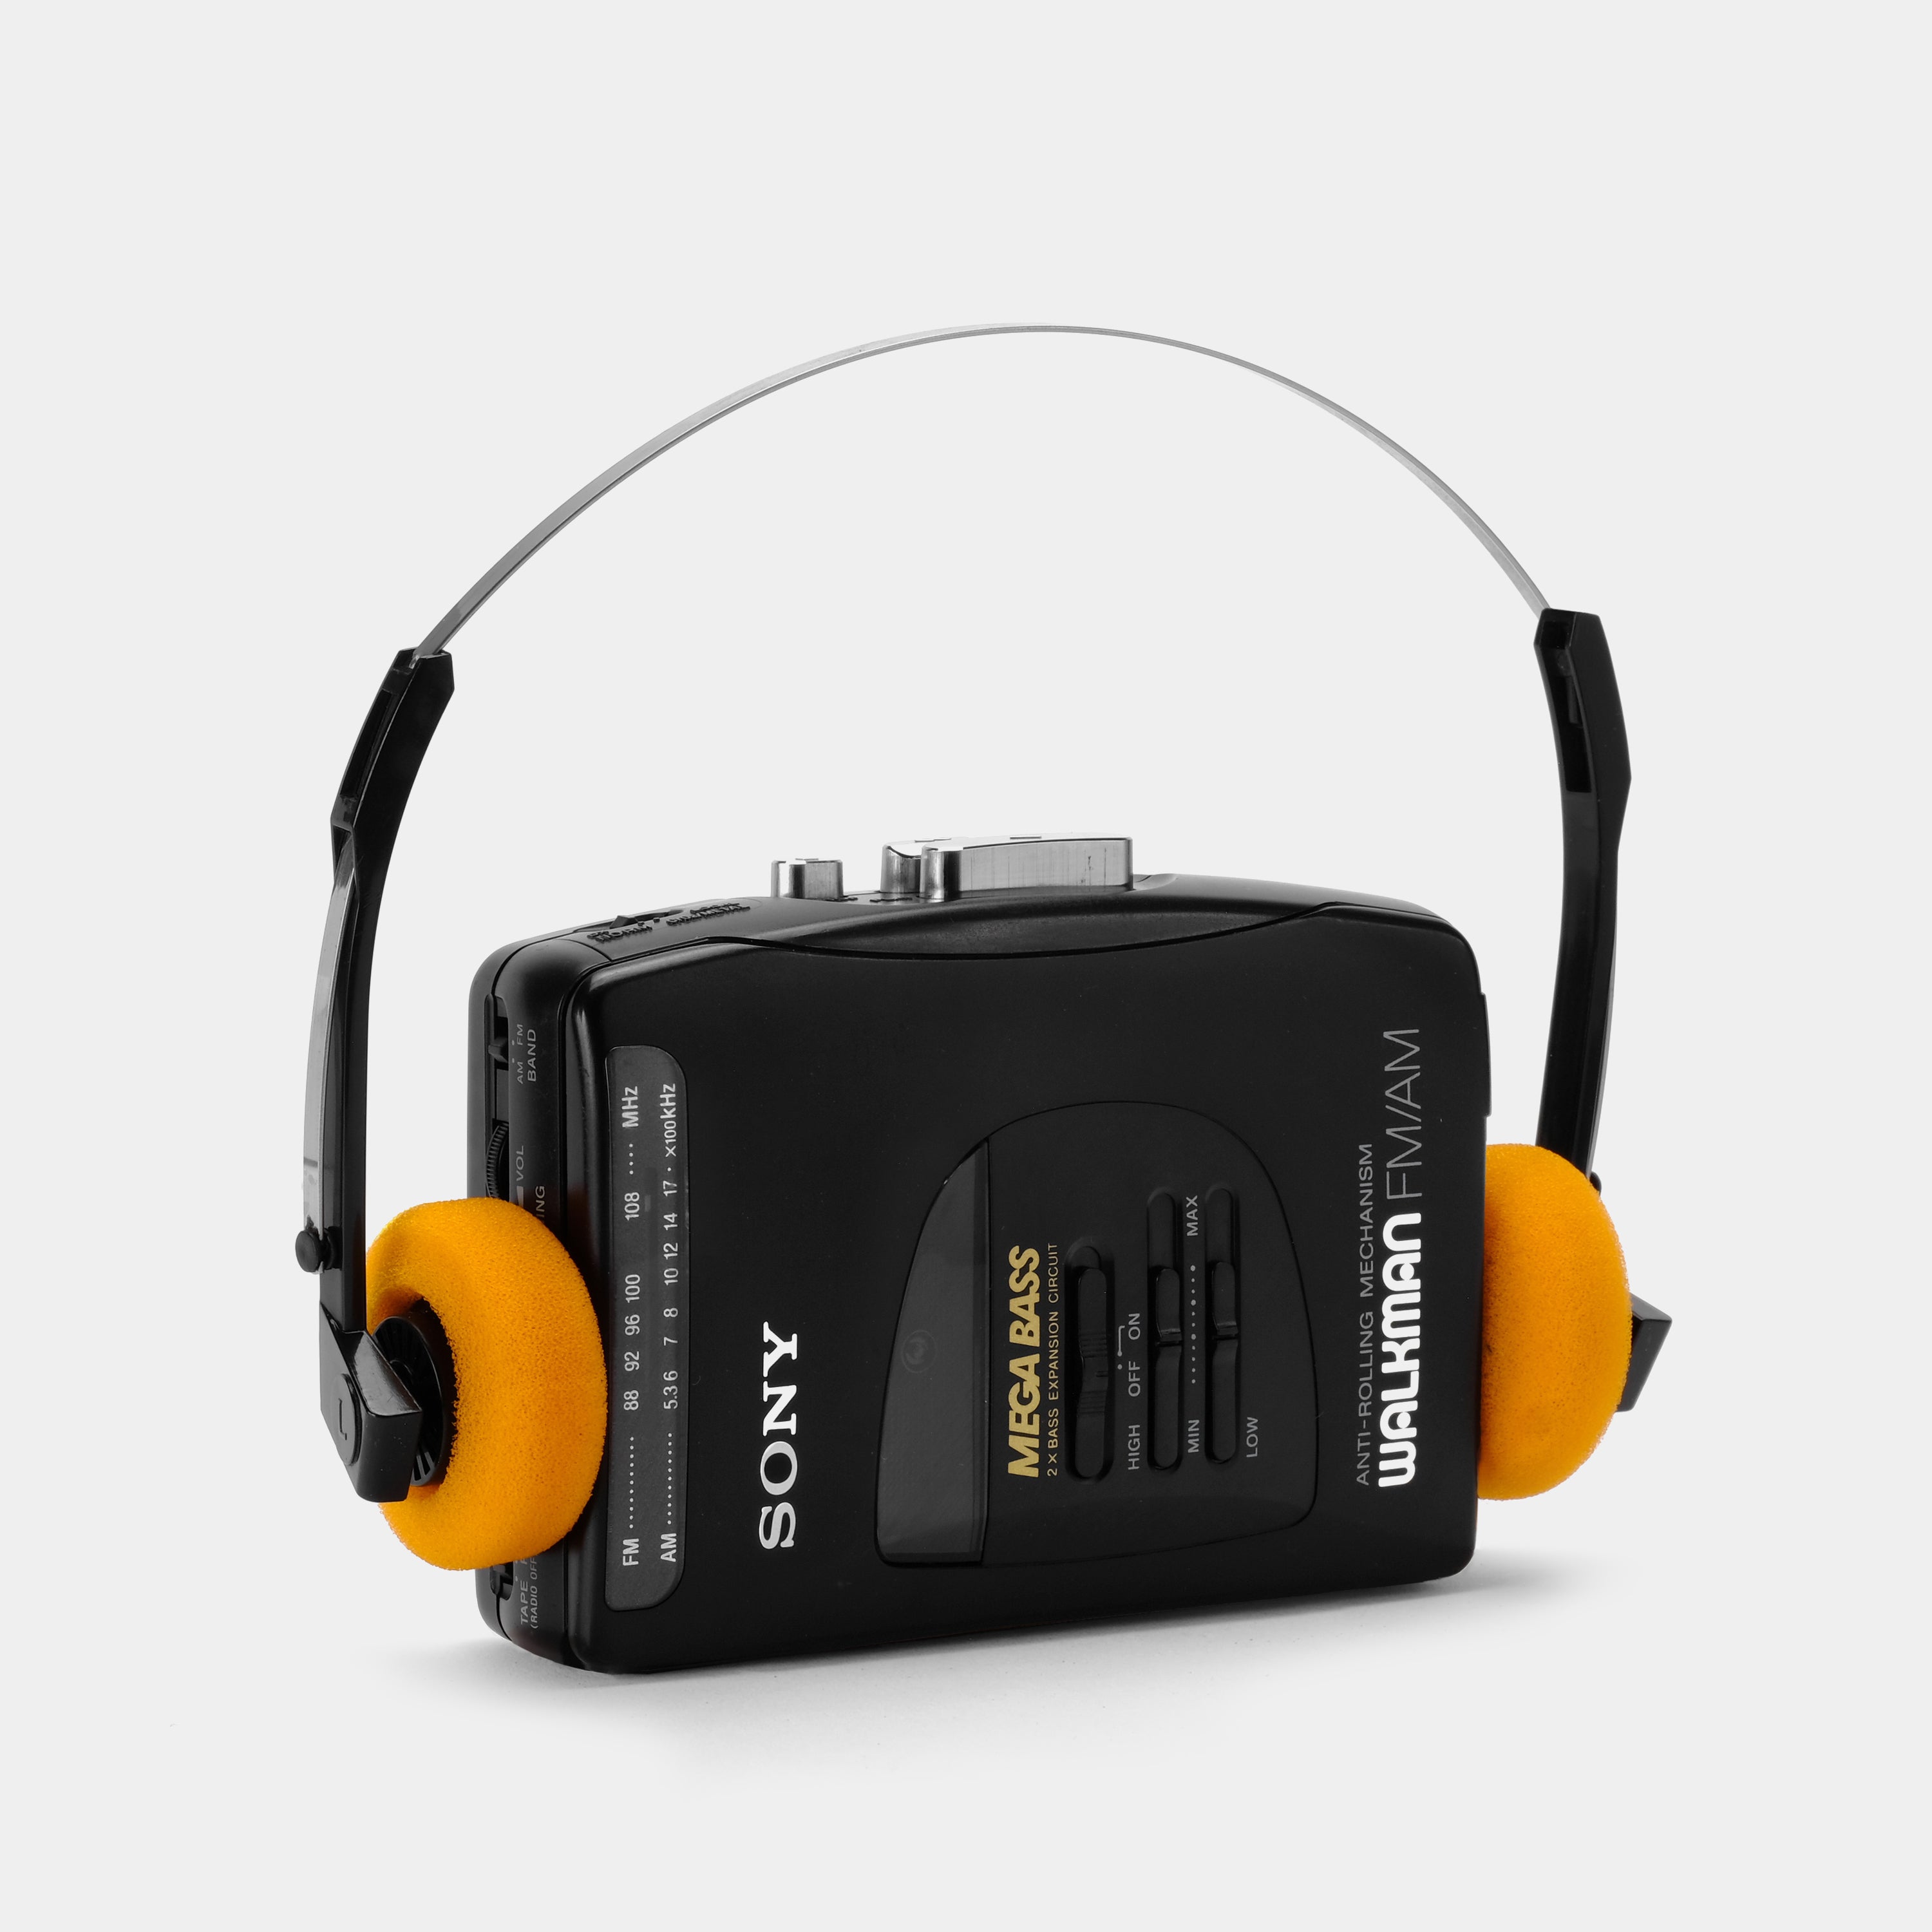 Sony Walkman WM-FX16 AM/FM Portable Cassette Player